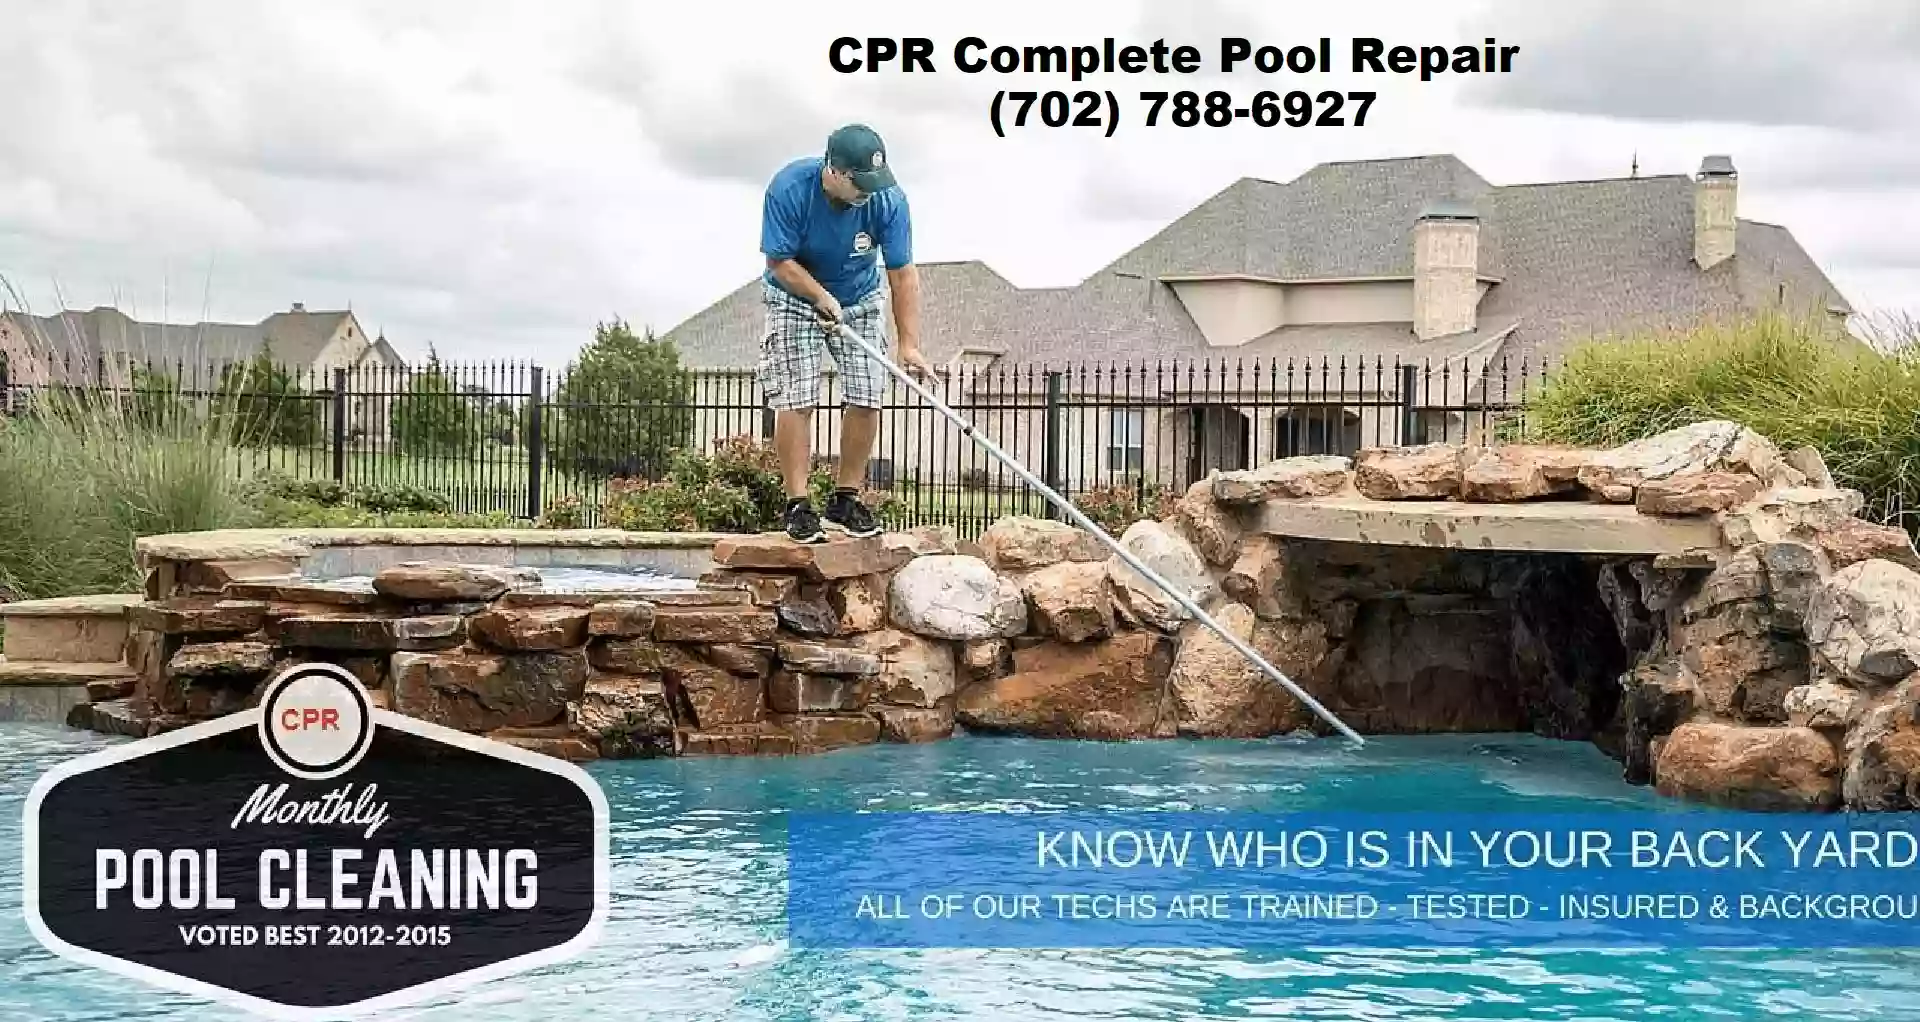 Complete Pool Repair LLC